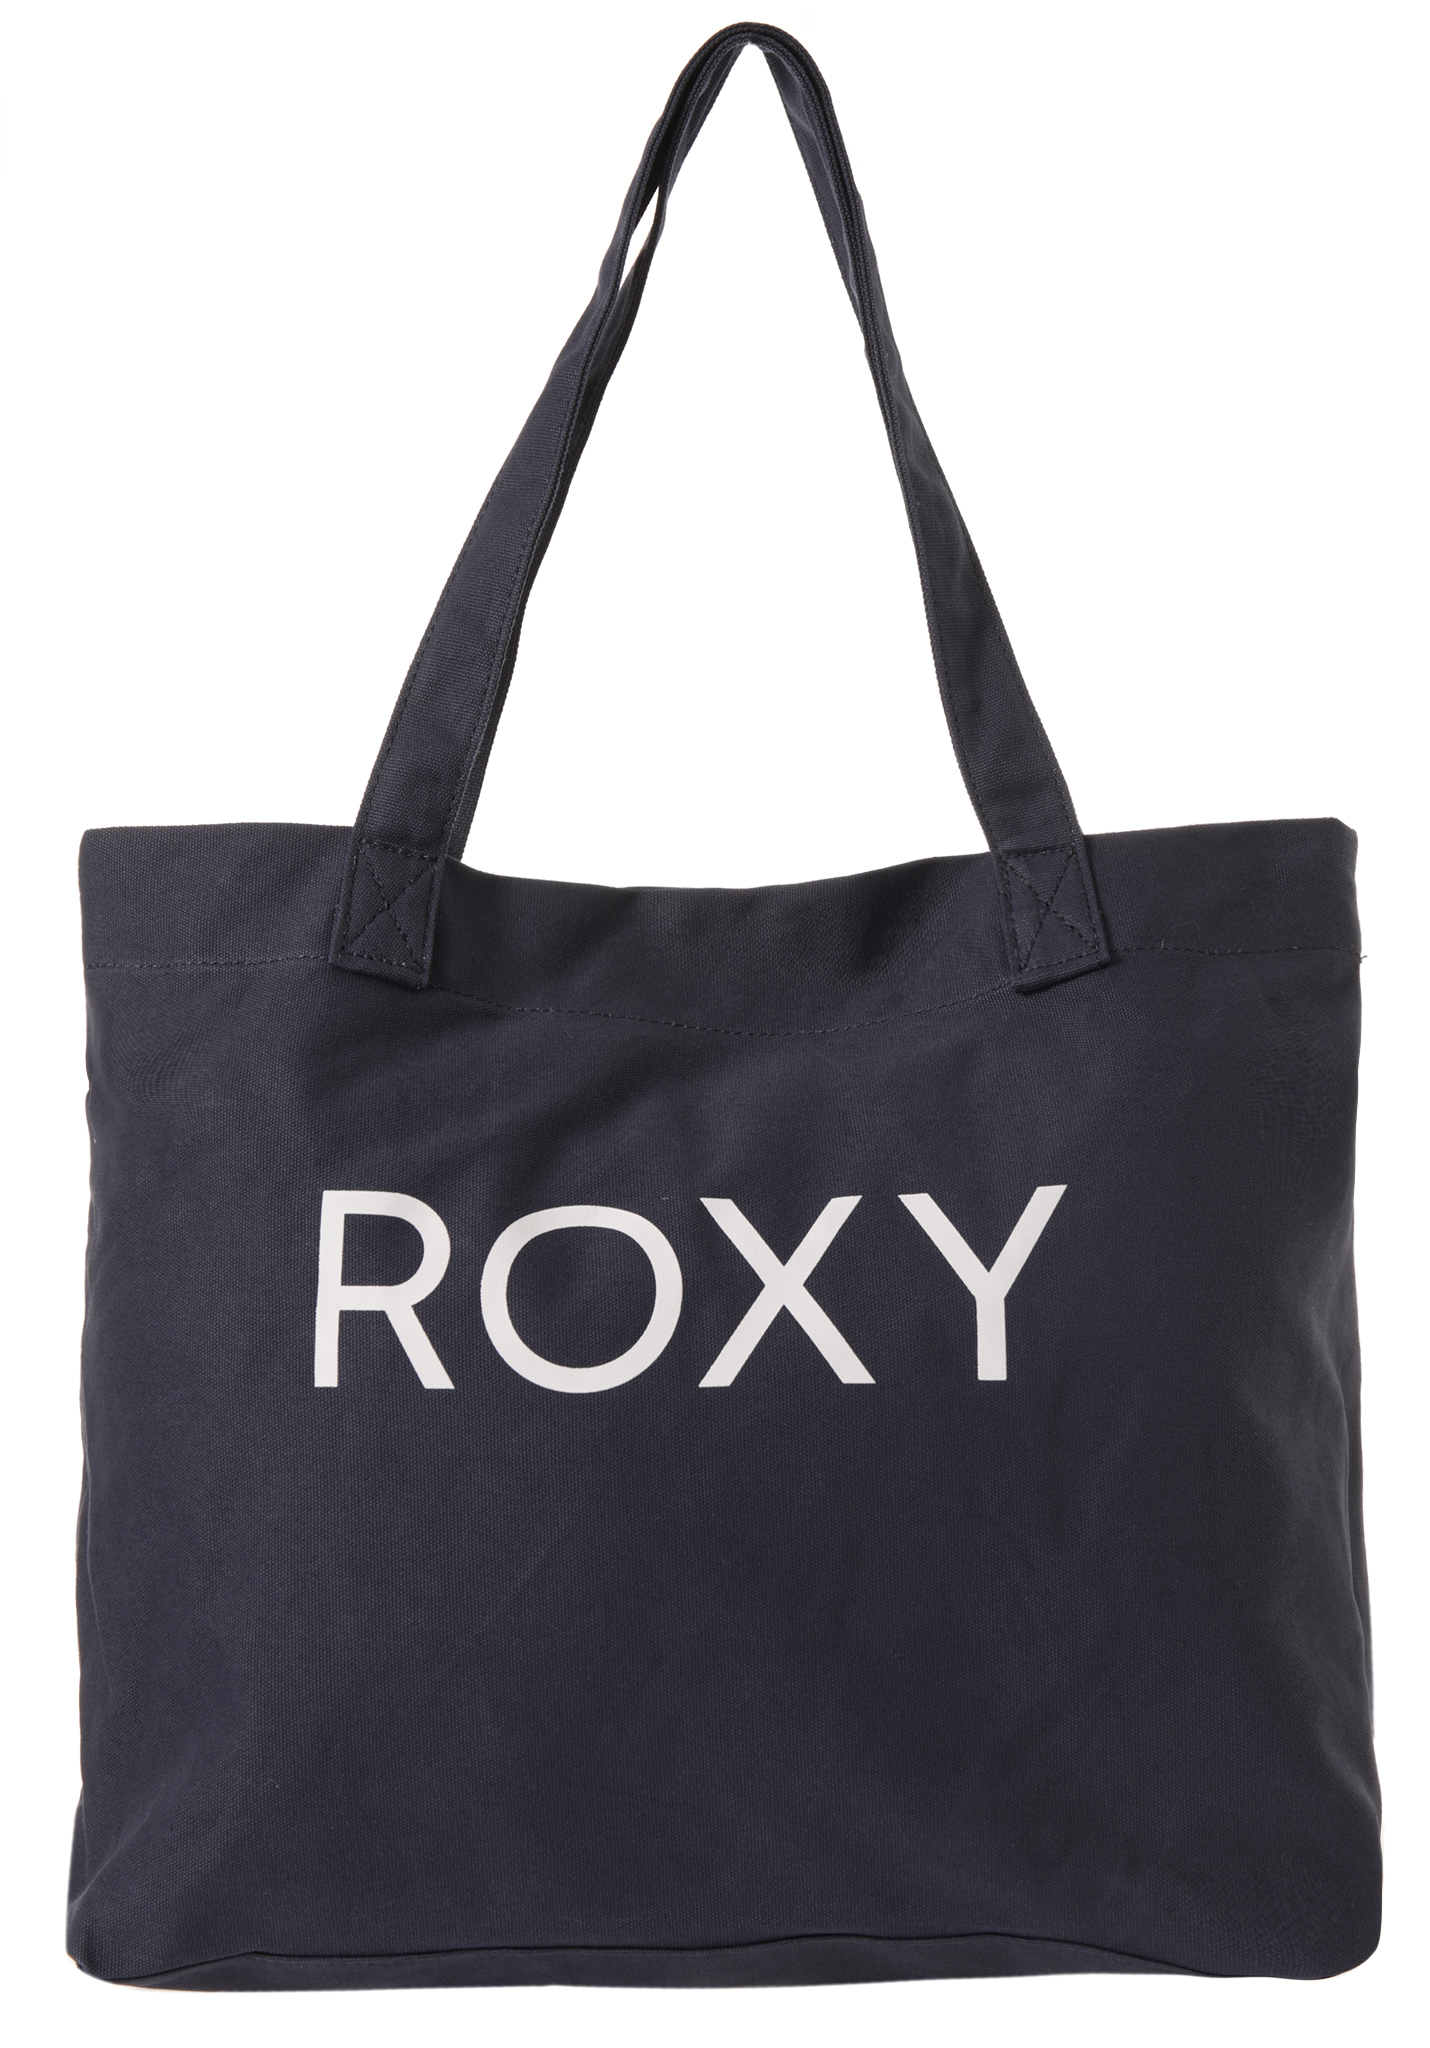 Roxy Go For It Tasche mood indigo One Size